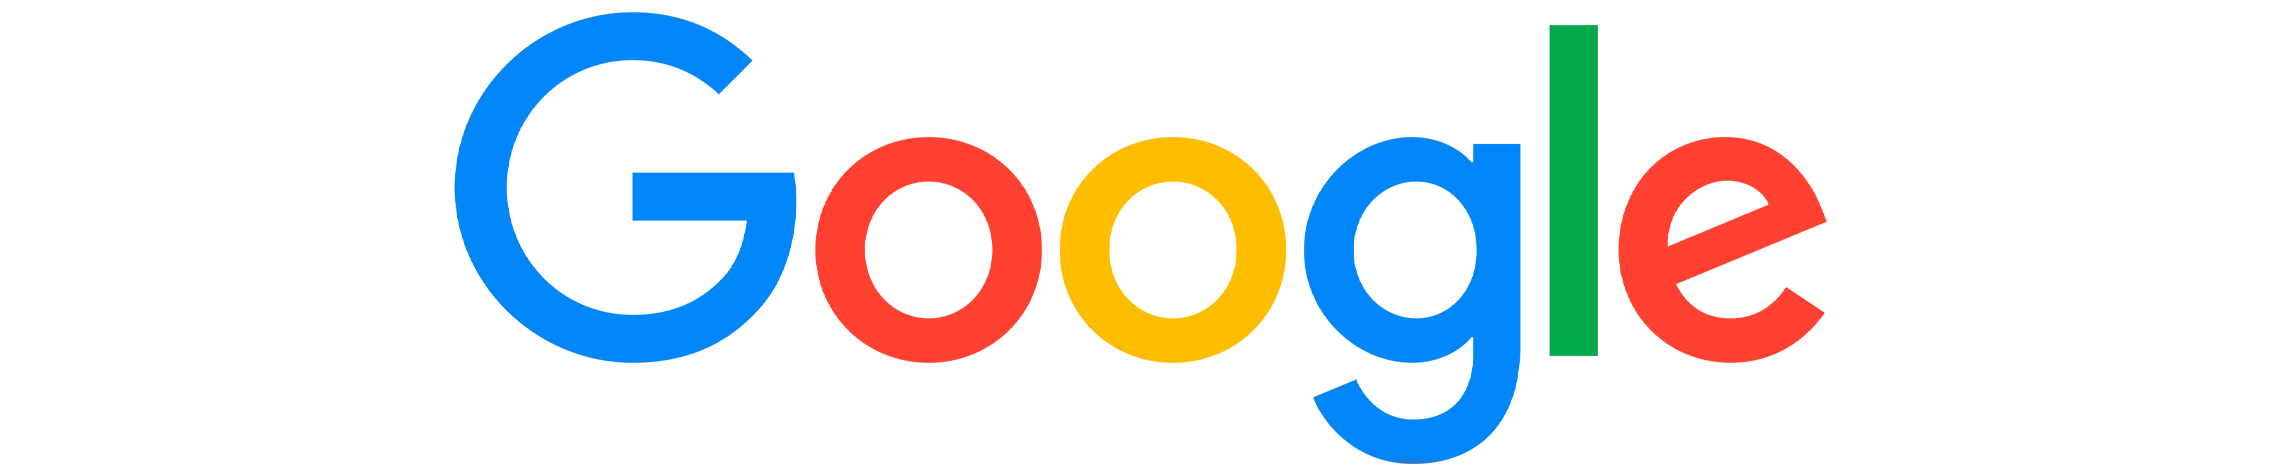 Leads Logos Google